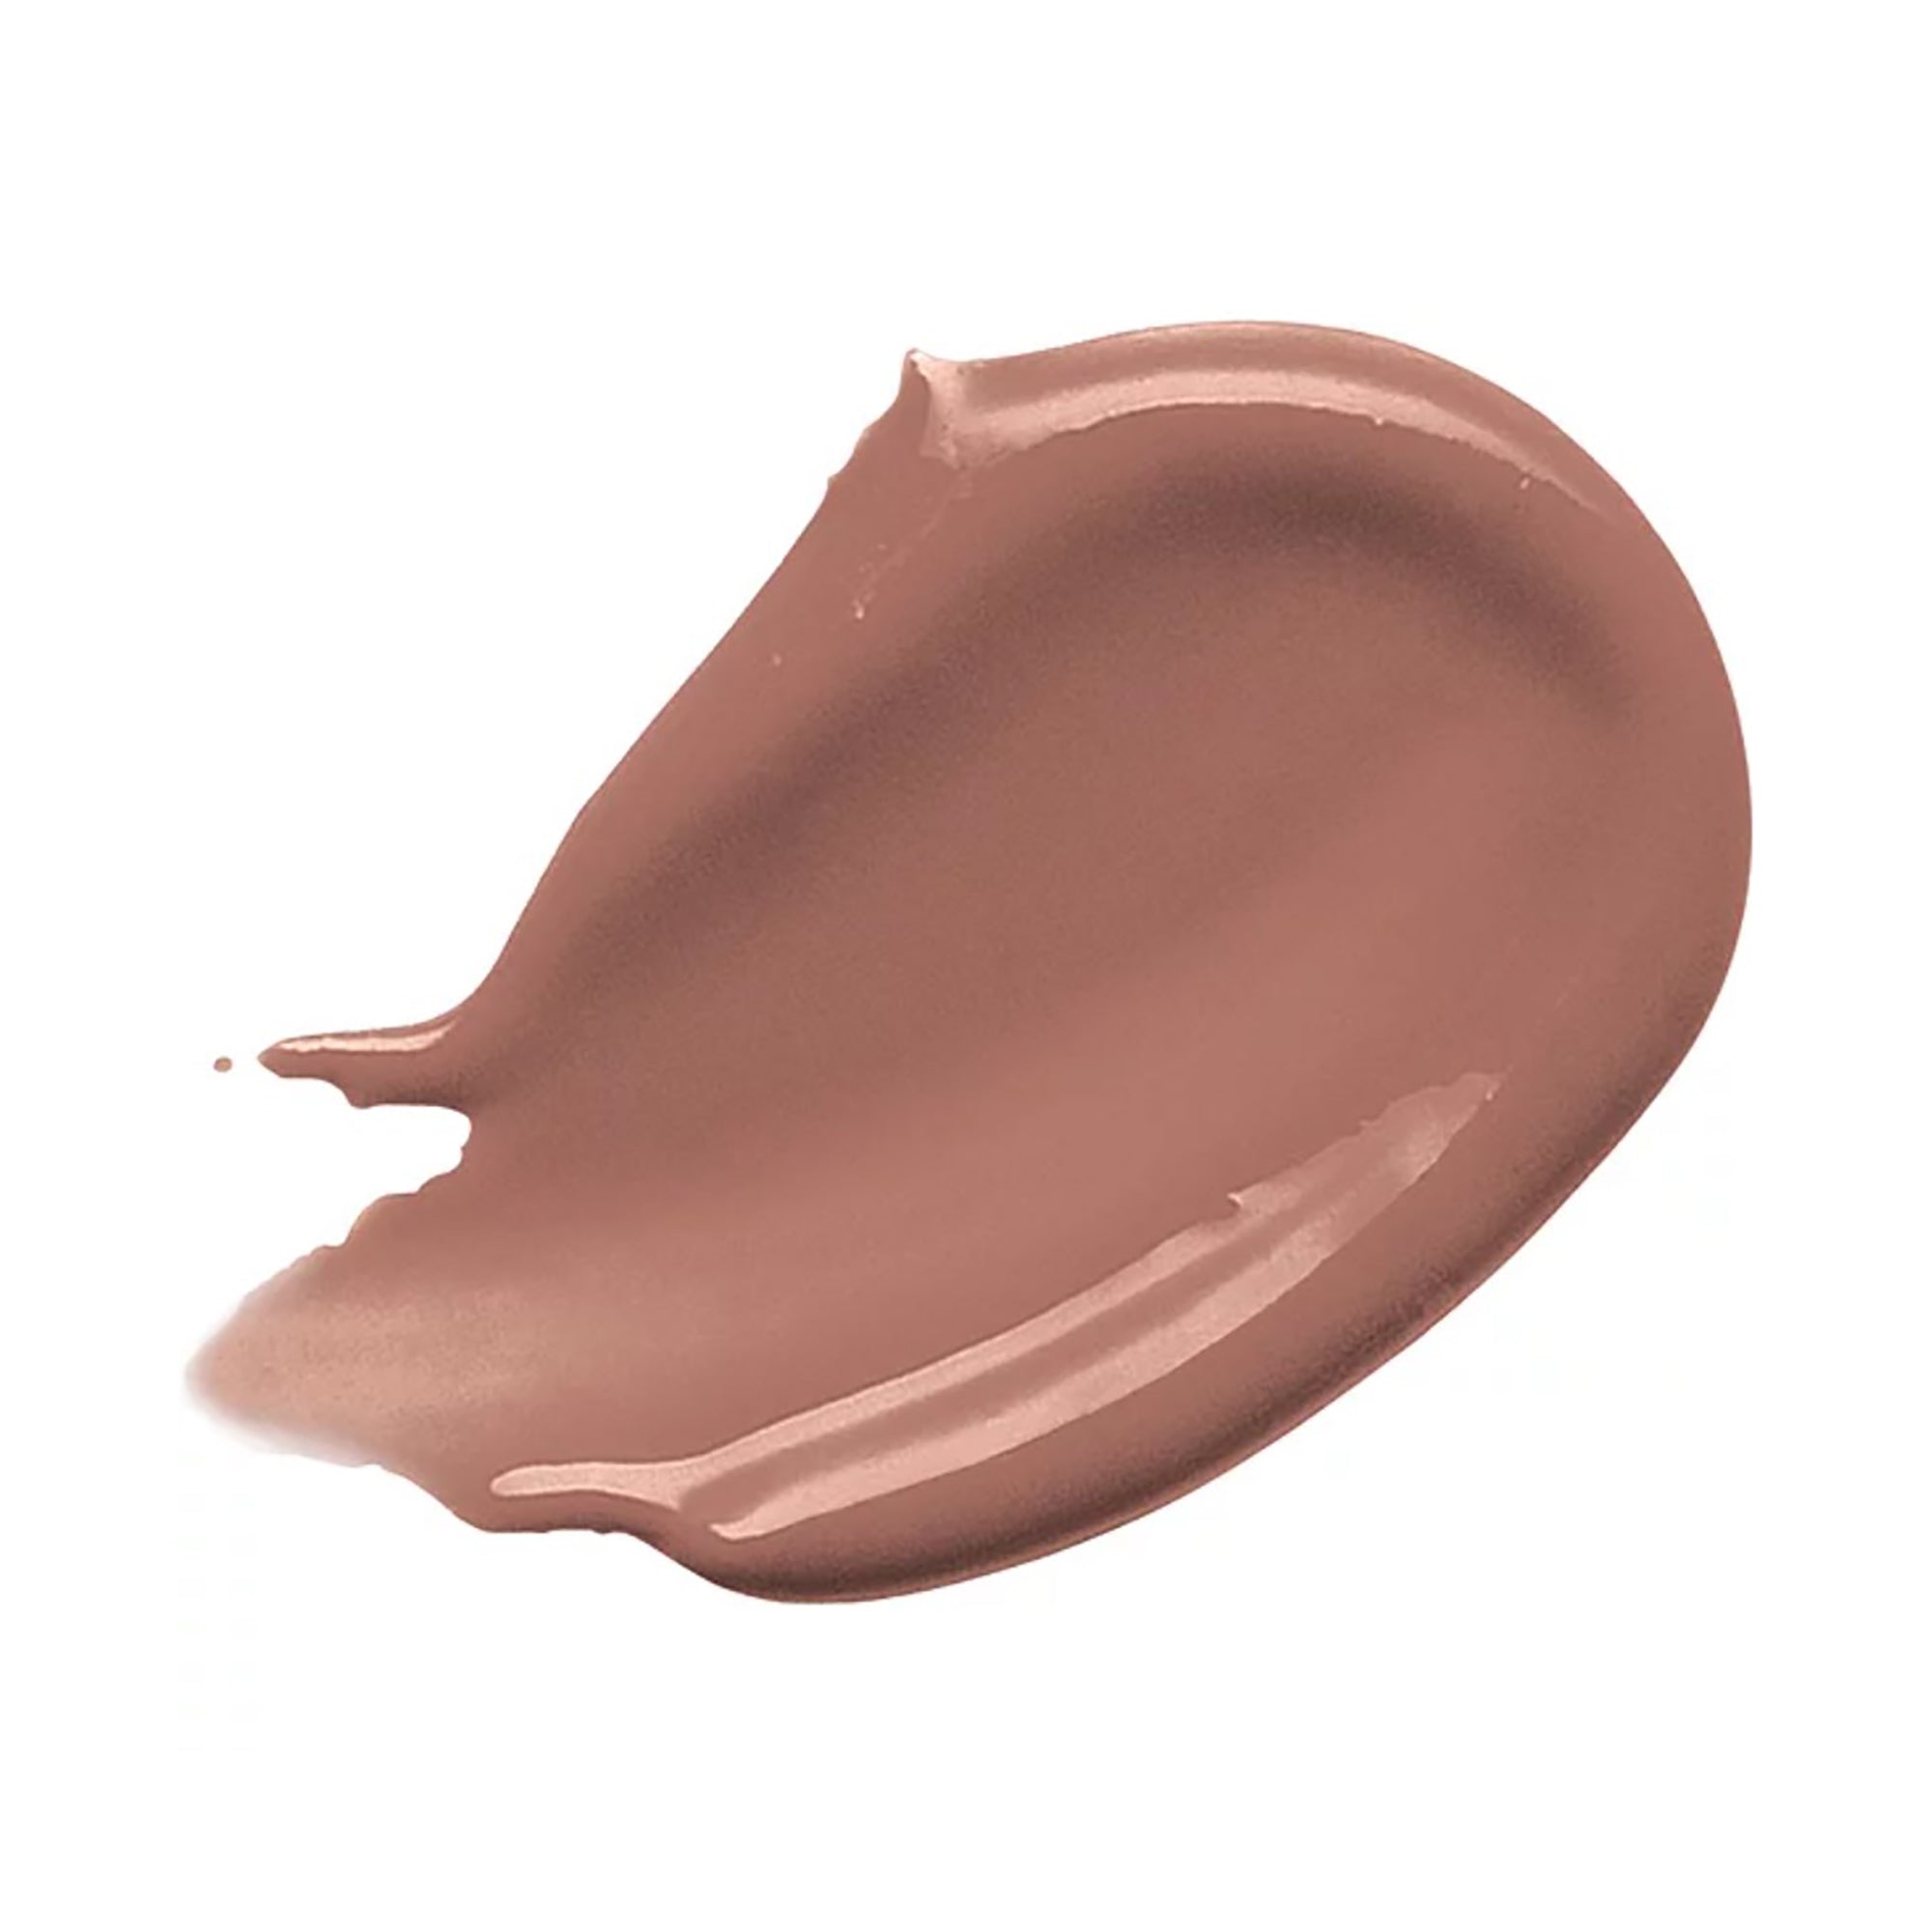 Buxom Full-on Plumping Lip Cream Gloss / BLUSHING MARGARITA / Swatch